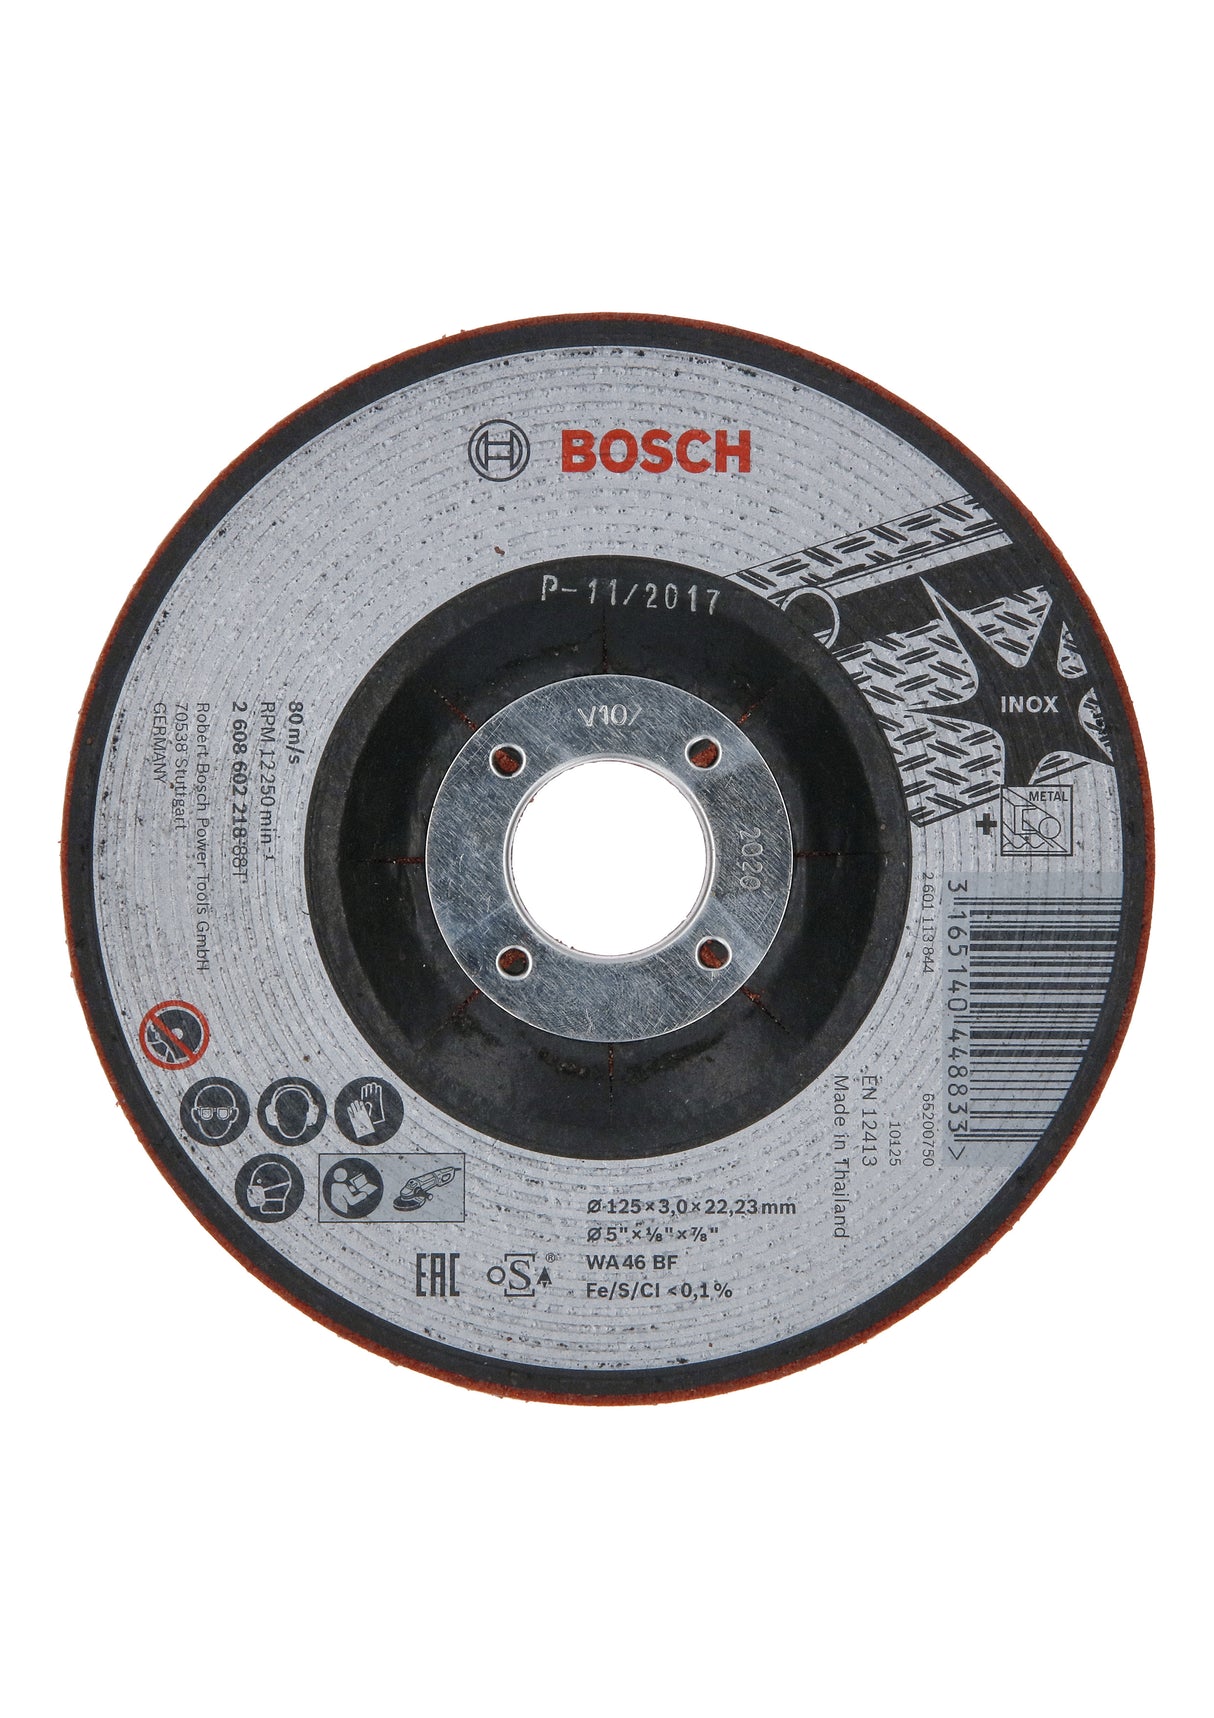 Bosch Professional Semi-Flexible Grinding Disc WA 46 BF - 125mm x 3.0mm